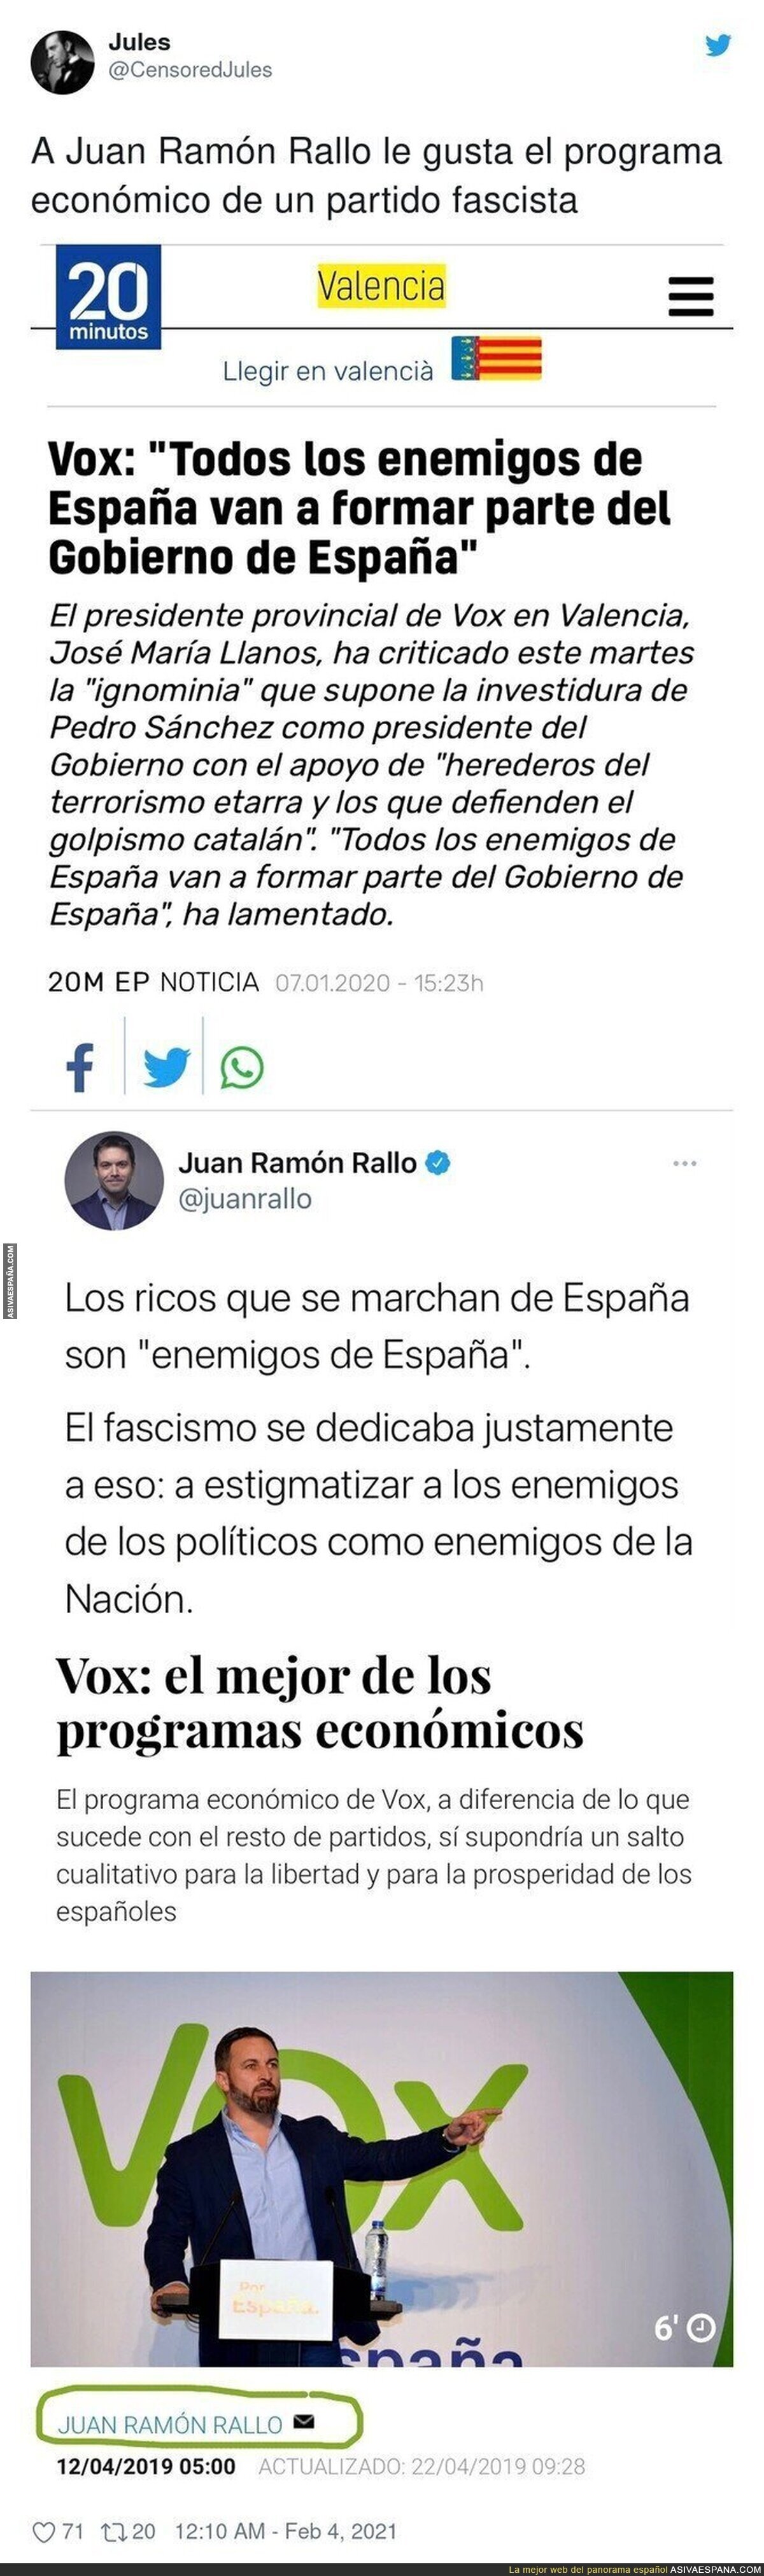 Juan Ramón Rallo no oculta sus preferencias